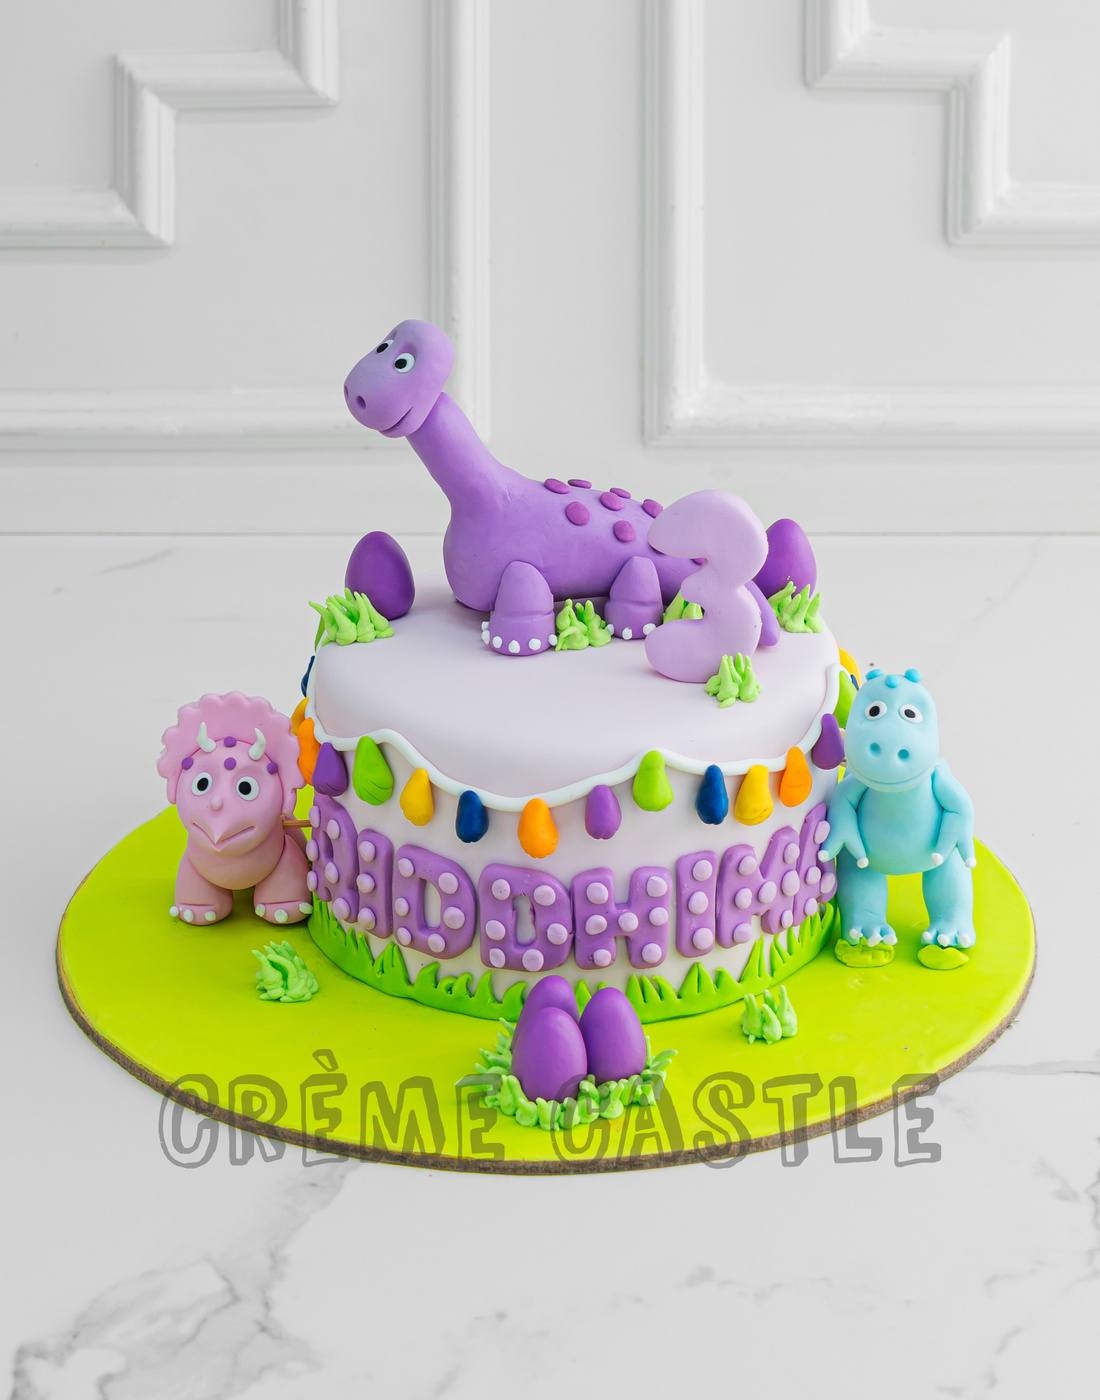 Dinosaur Family Cake